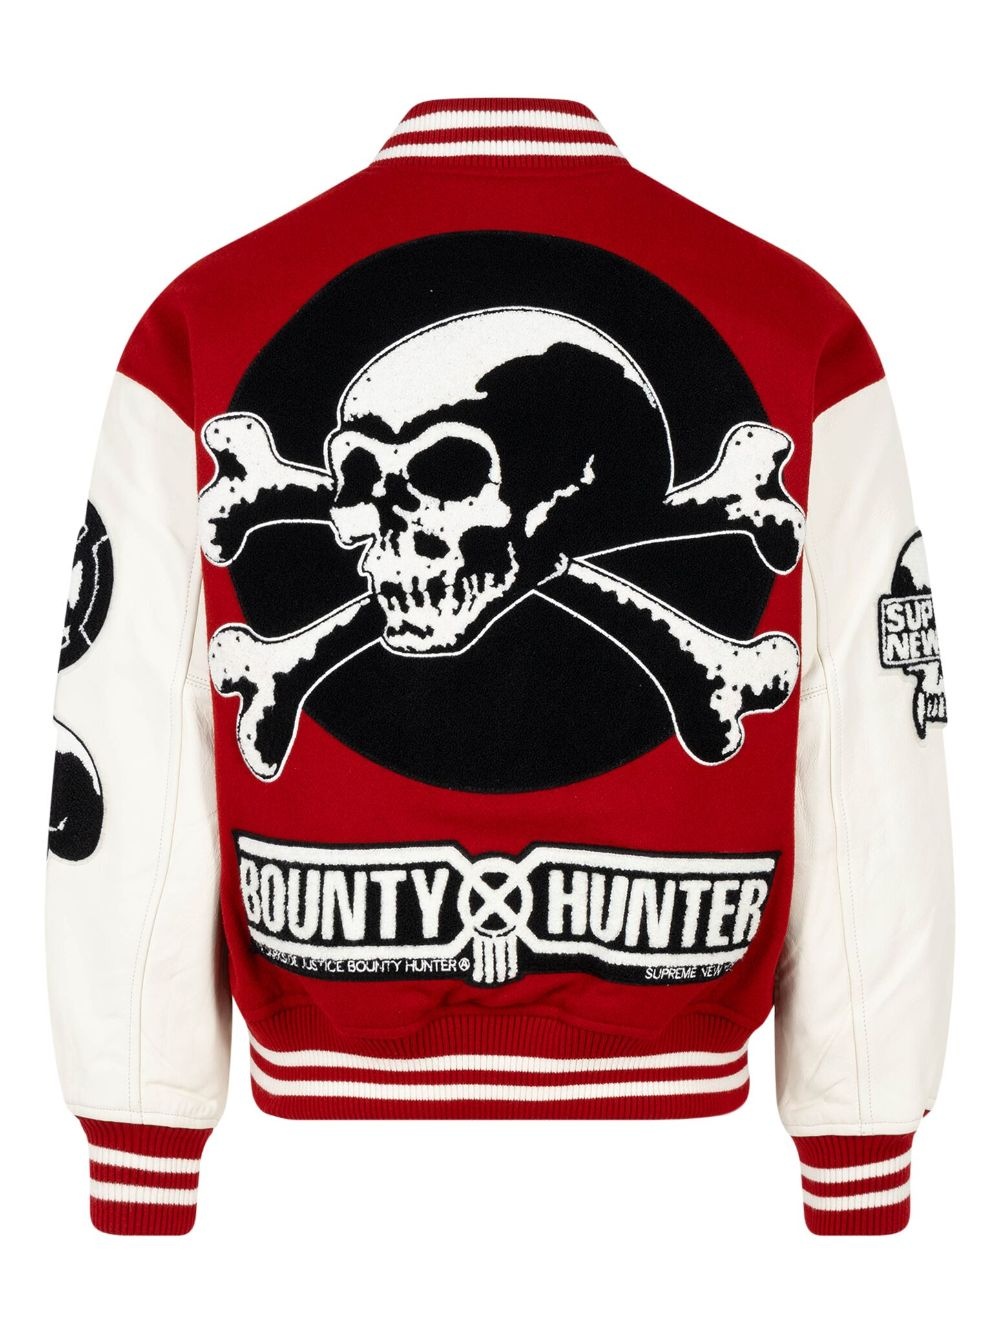 Bounty Hunter "Red" varsity jacket - 2